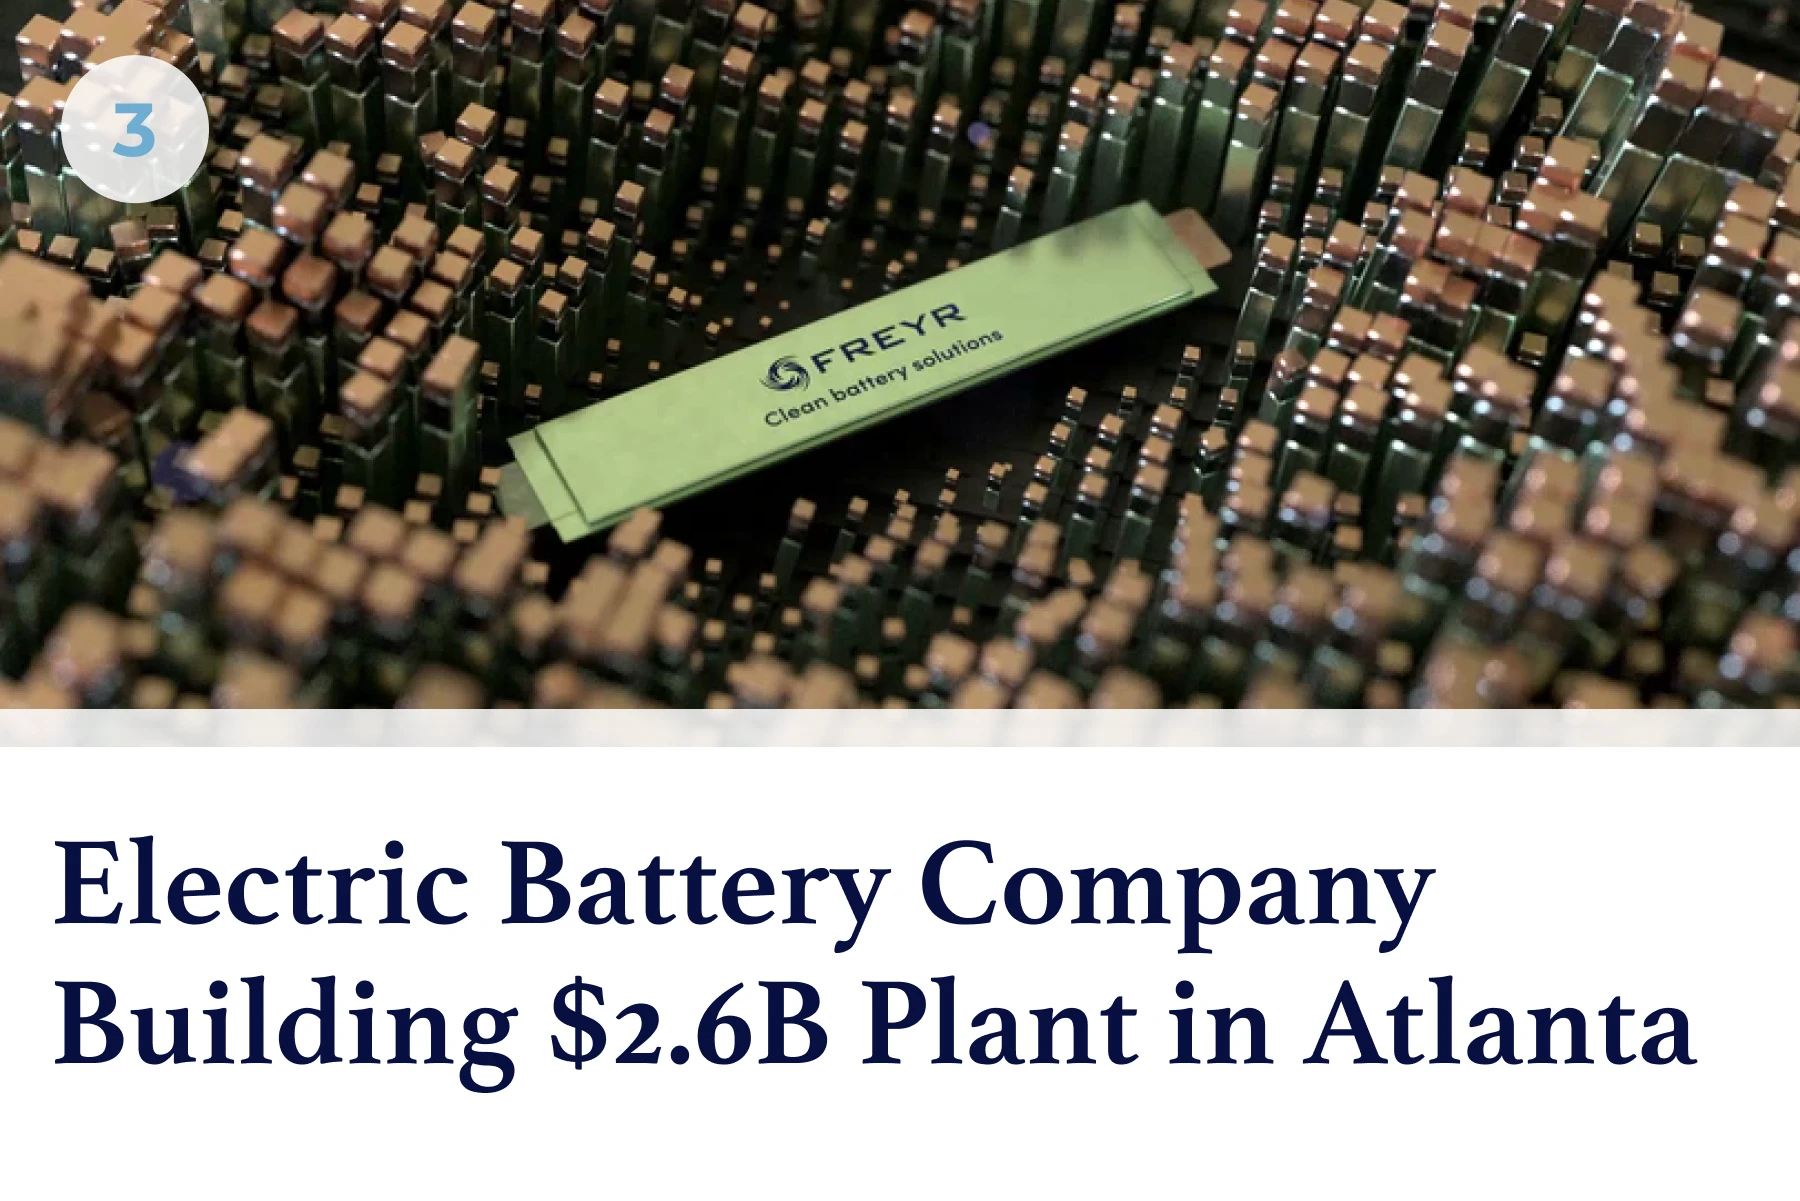 Electric Battery Company Building $2.6B Plant in Atlanta